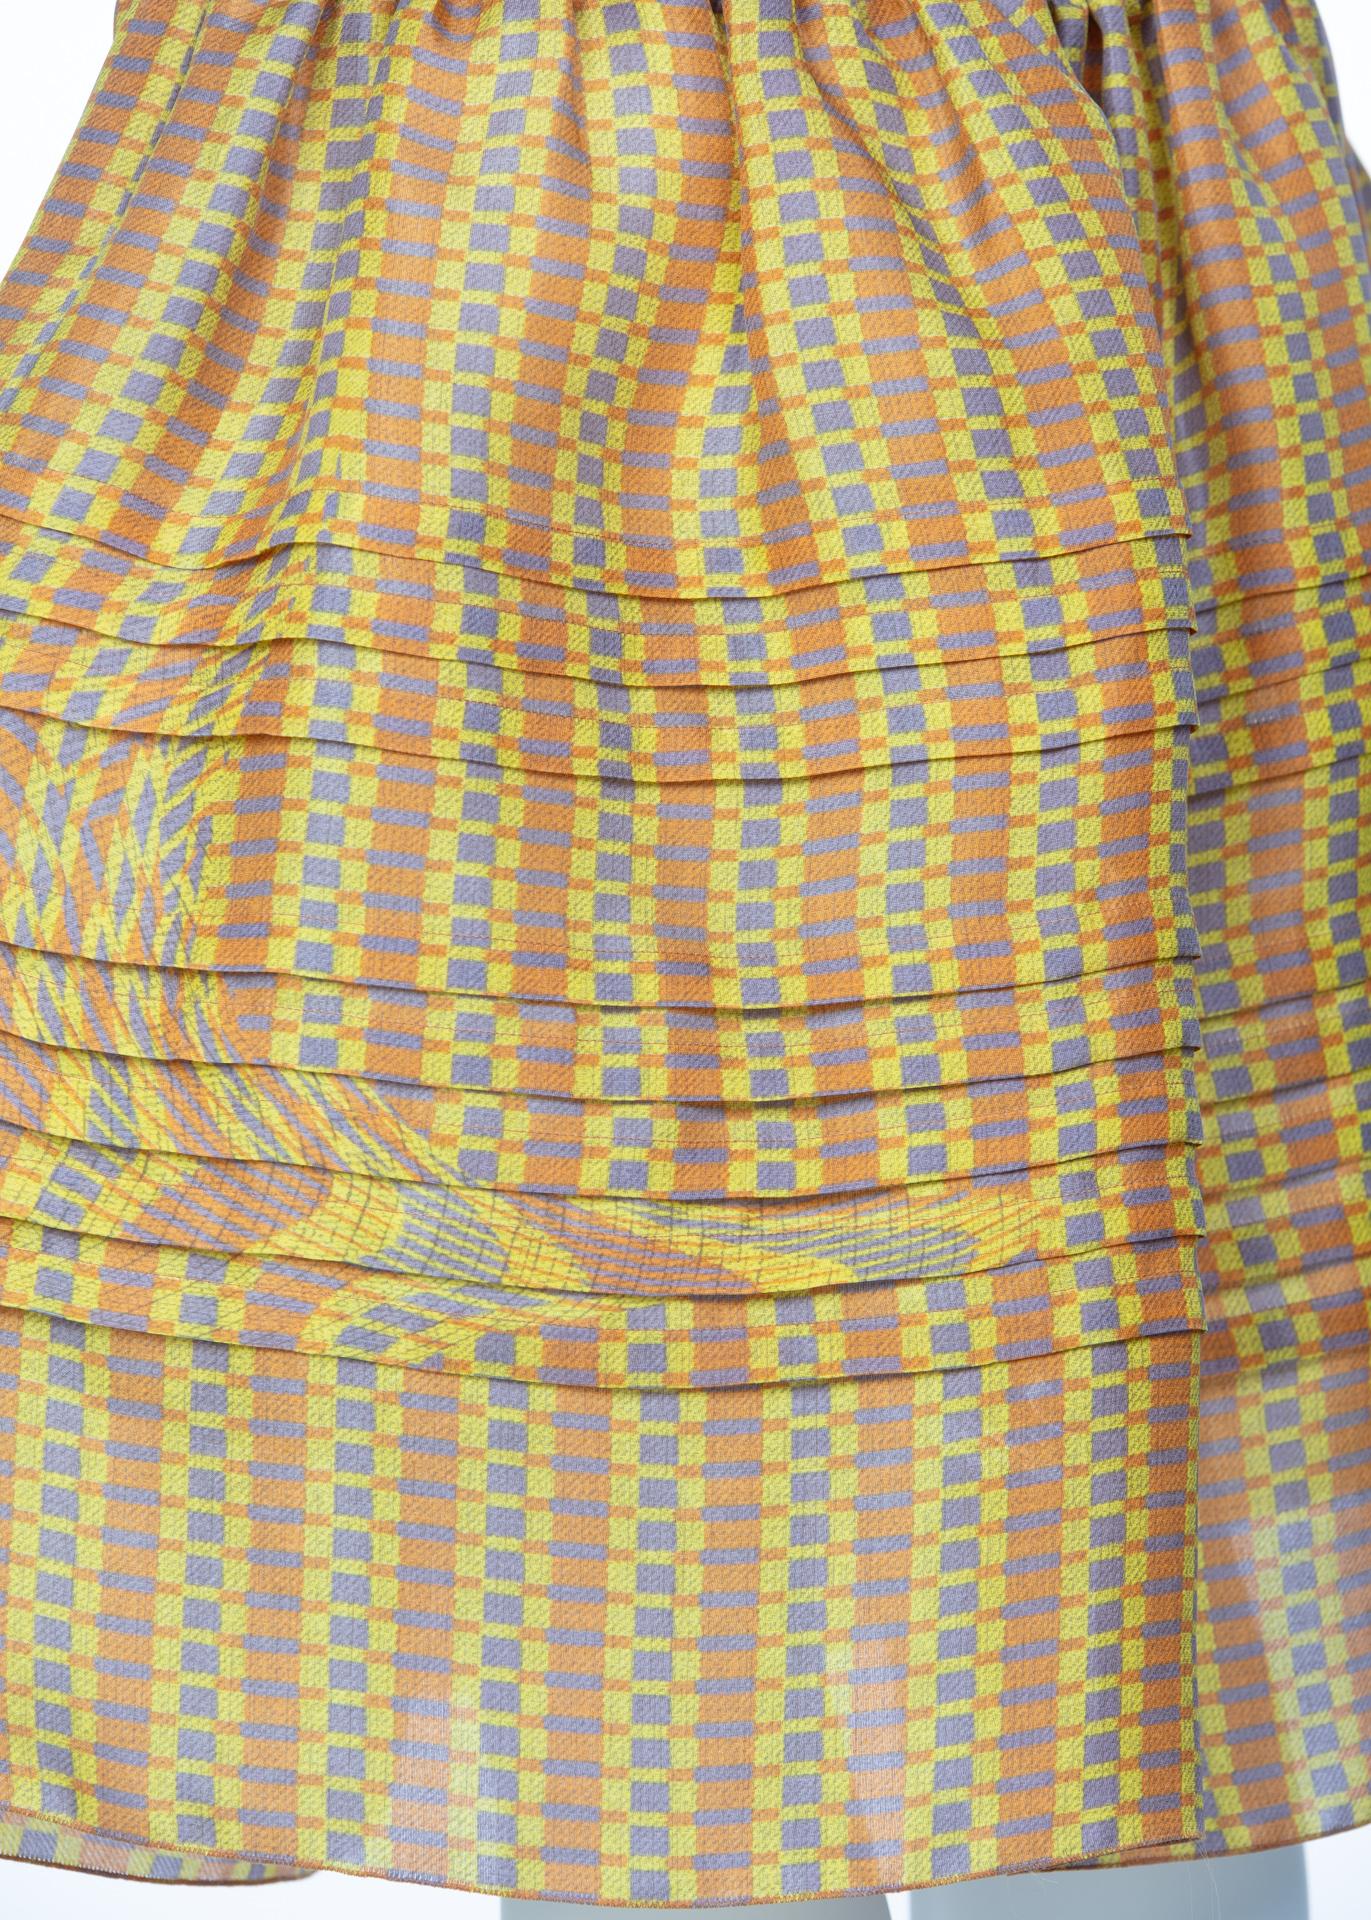 2008 Prada Fairy Runway Yellow Printed Silk Organza Skirt 1